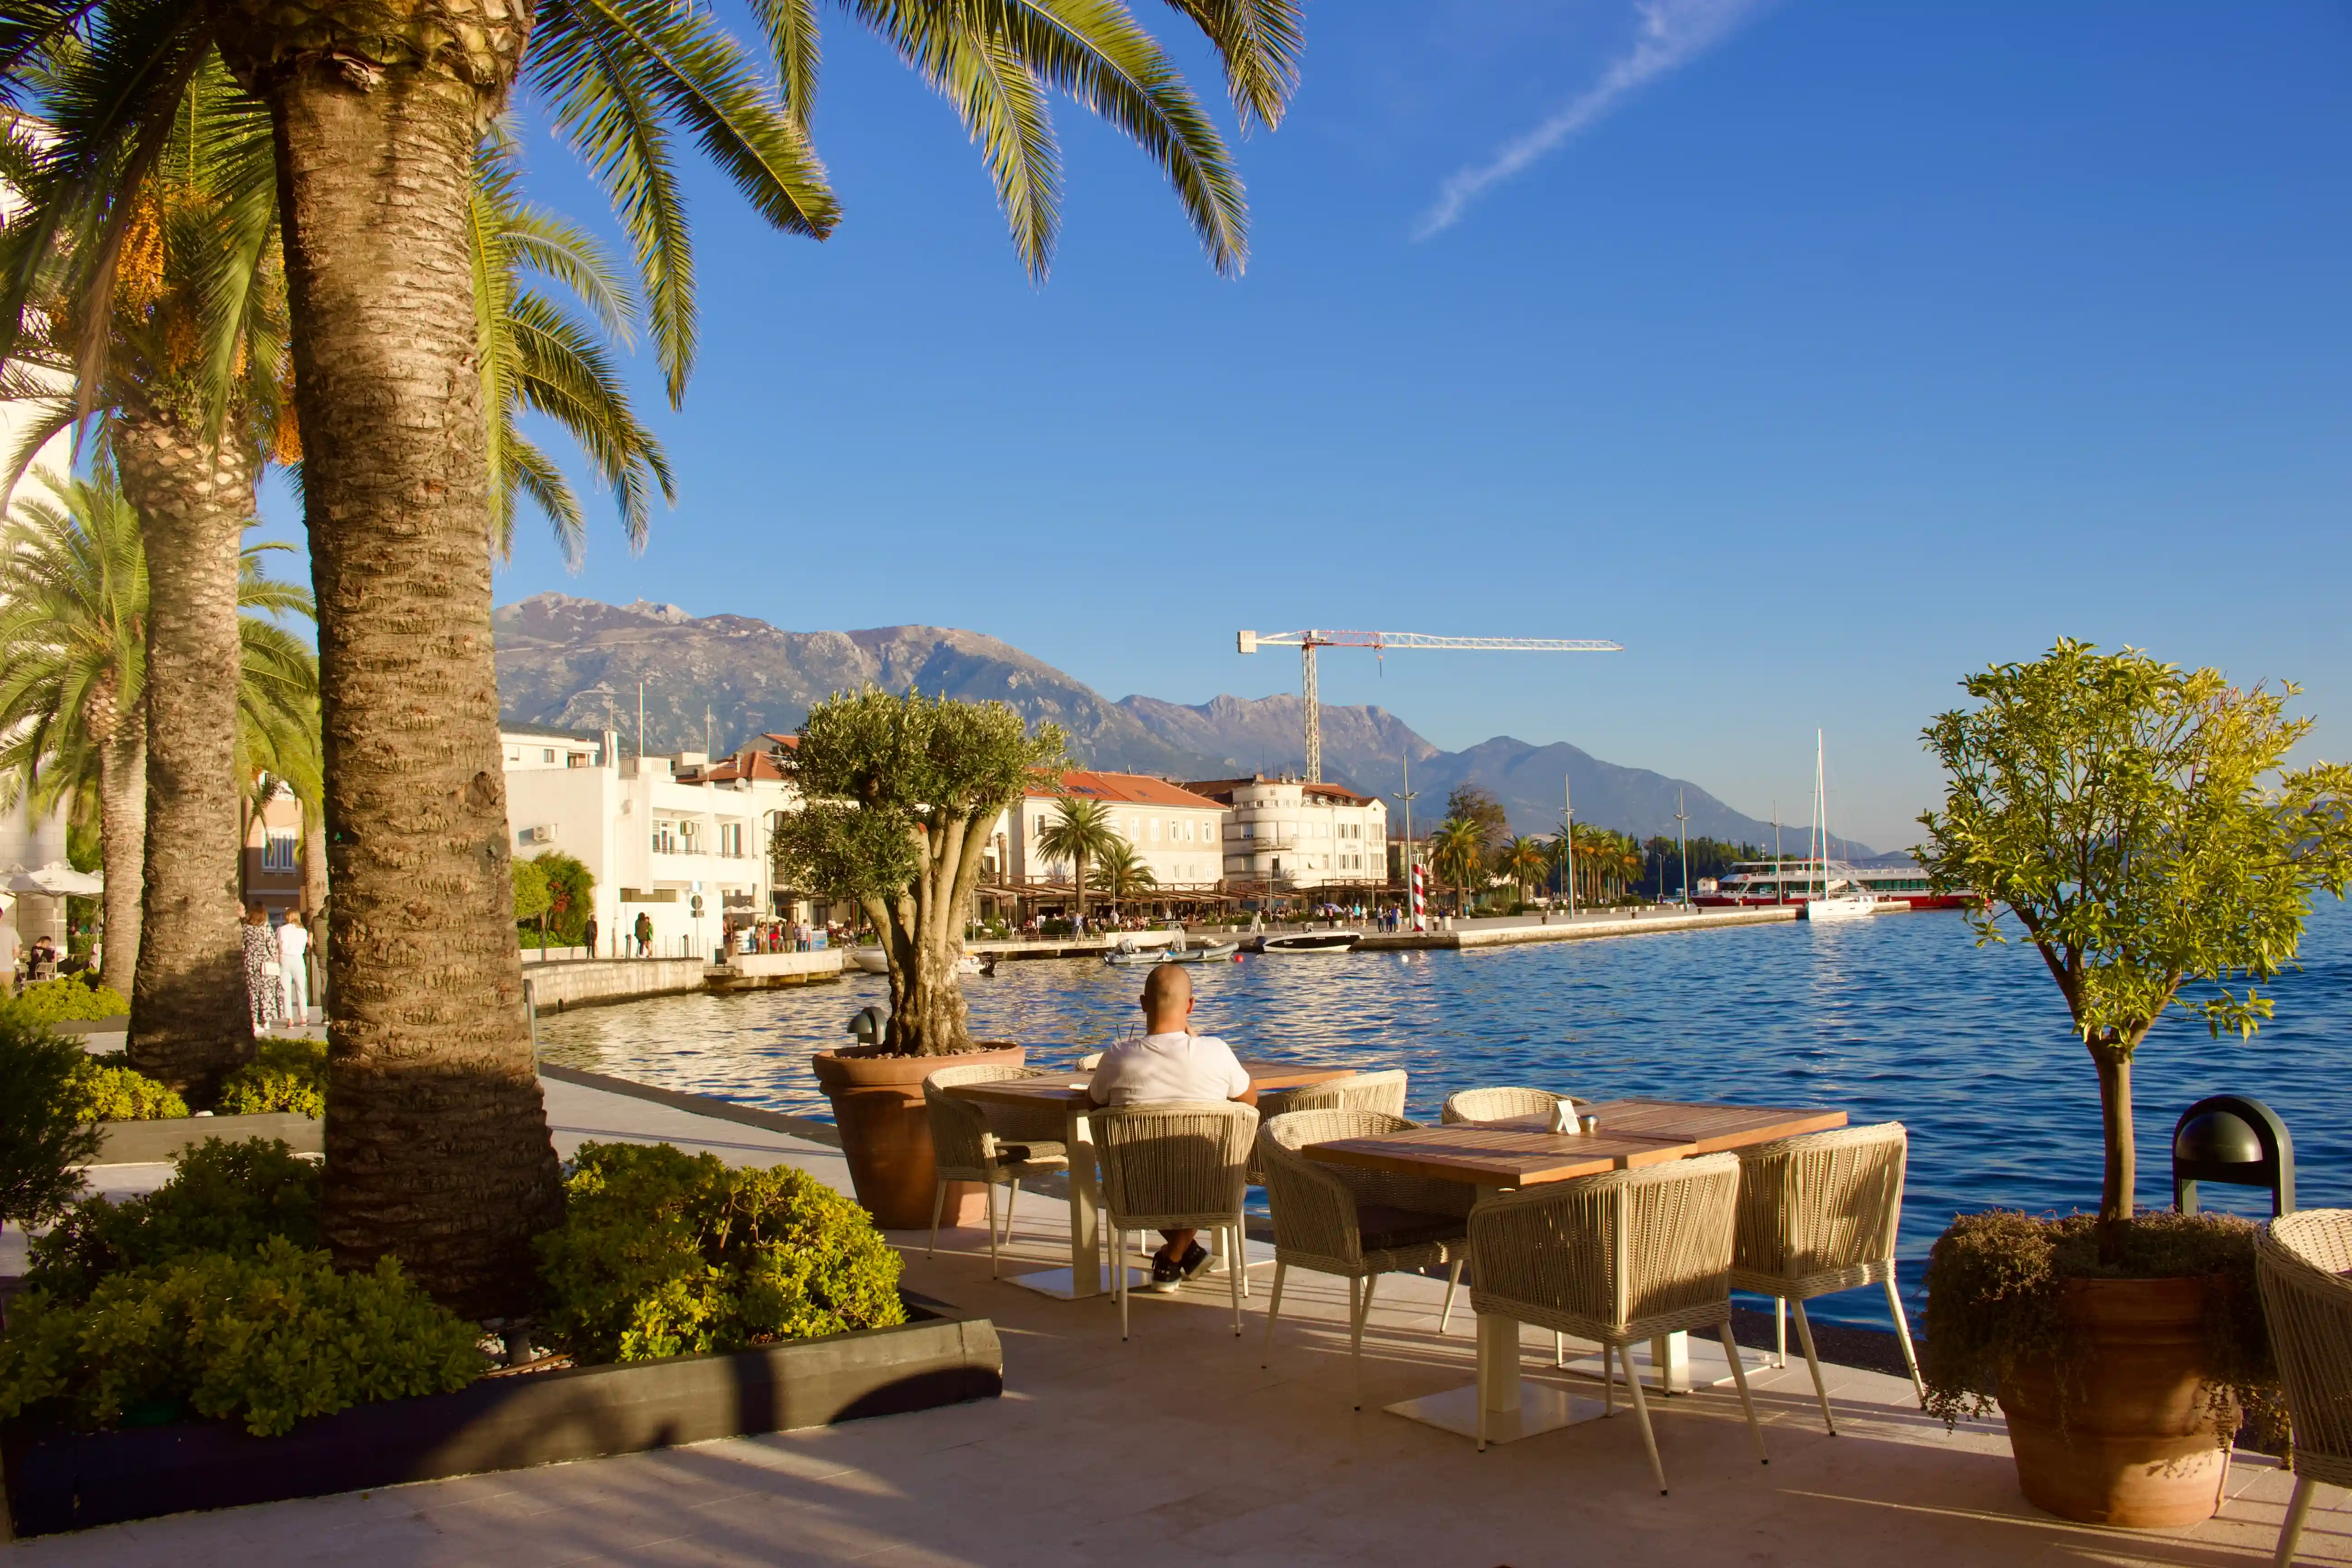 Imagine Is Montenegro a luxury destination? in Montenegro